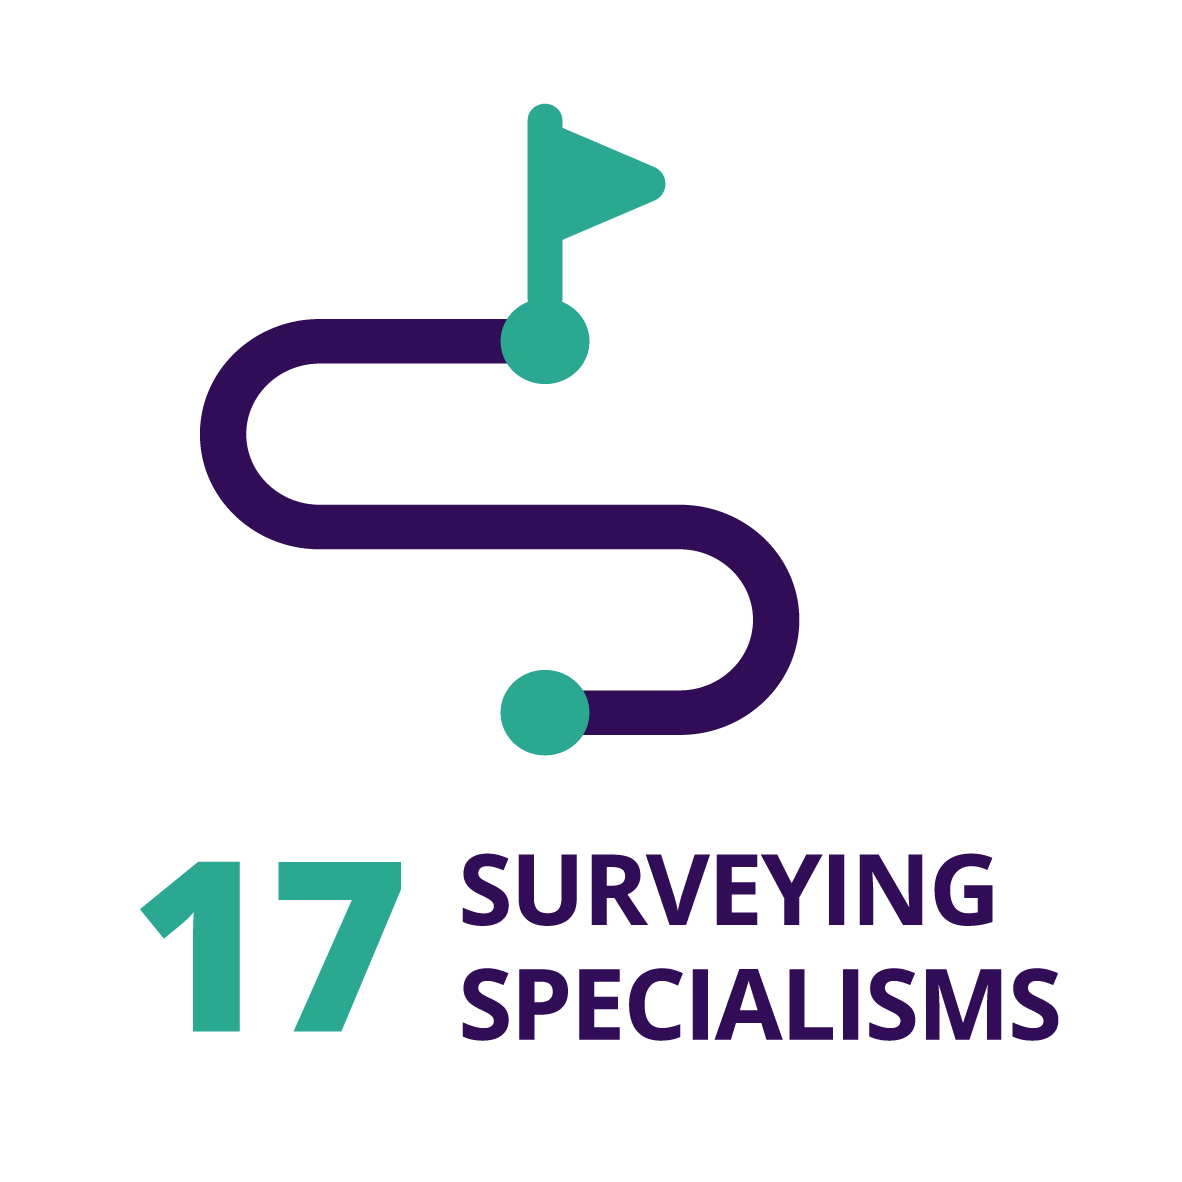 17 Surveying Specialisms